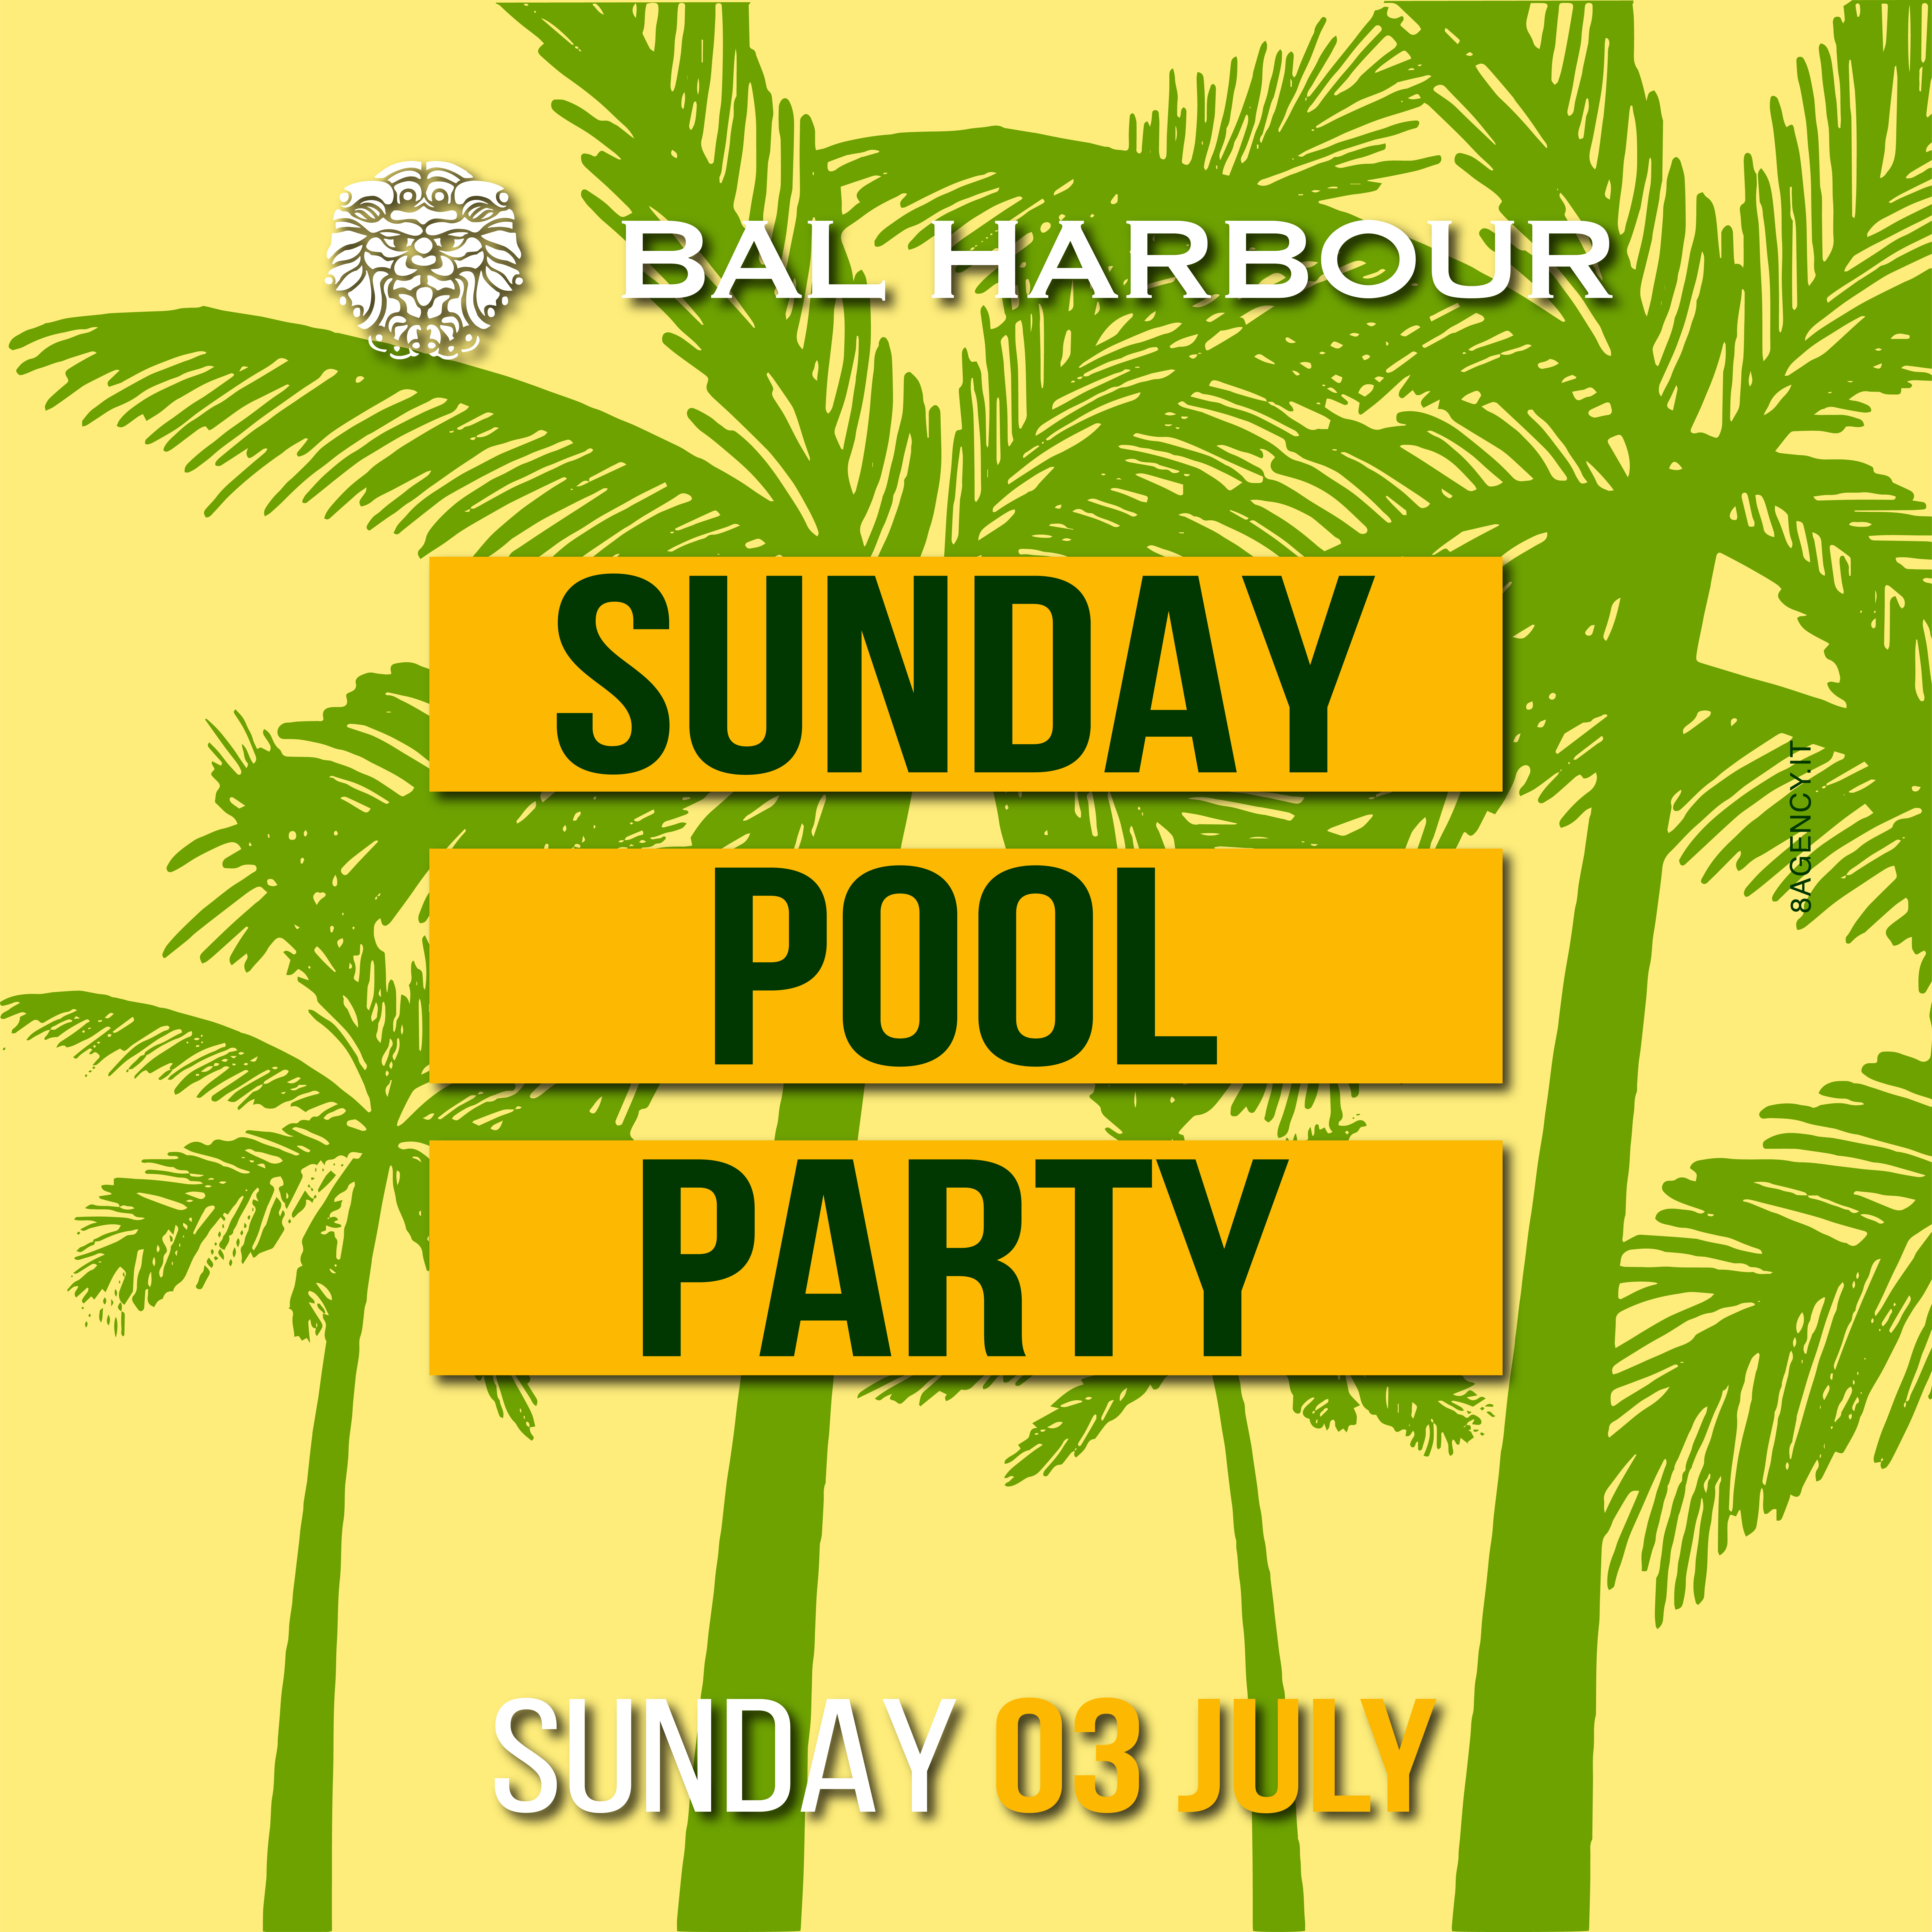 Pool Party in Piscina San Teodoro Sabato 2 Luglio 2022 - Bal Harbour